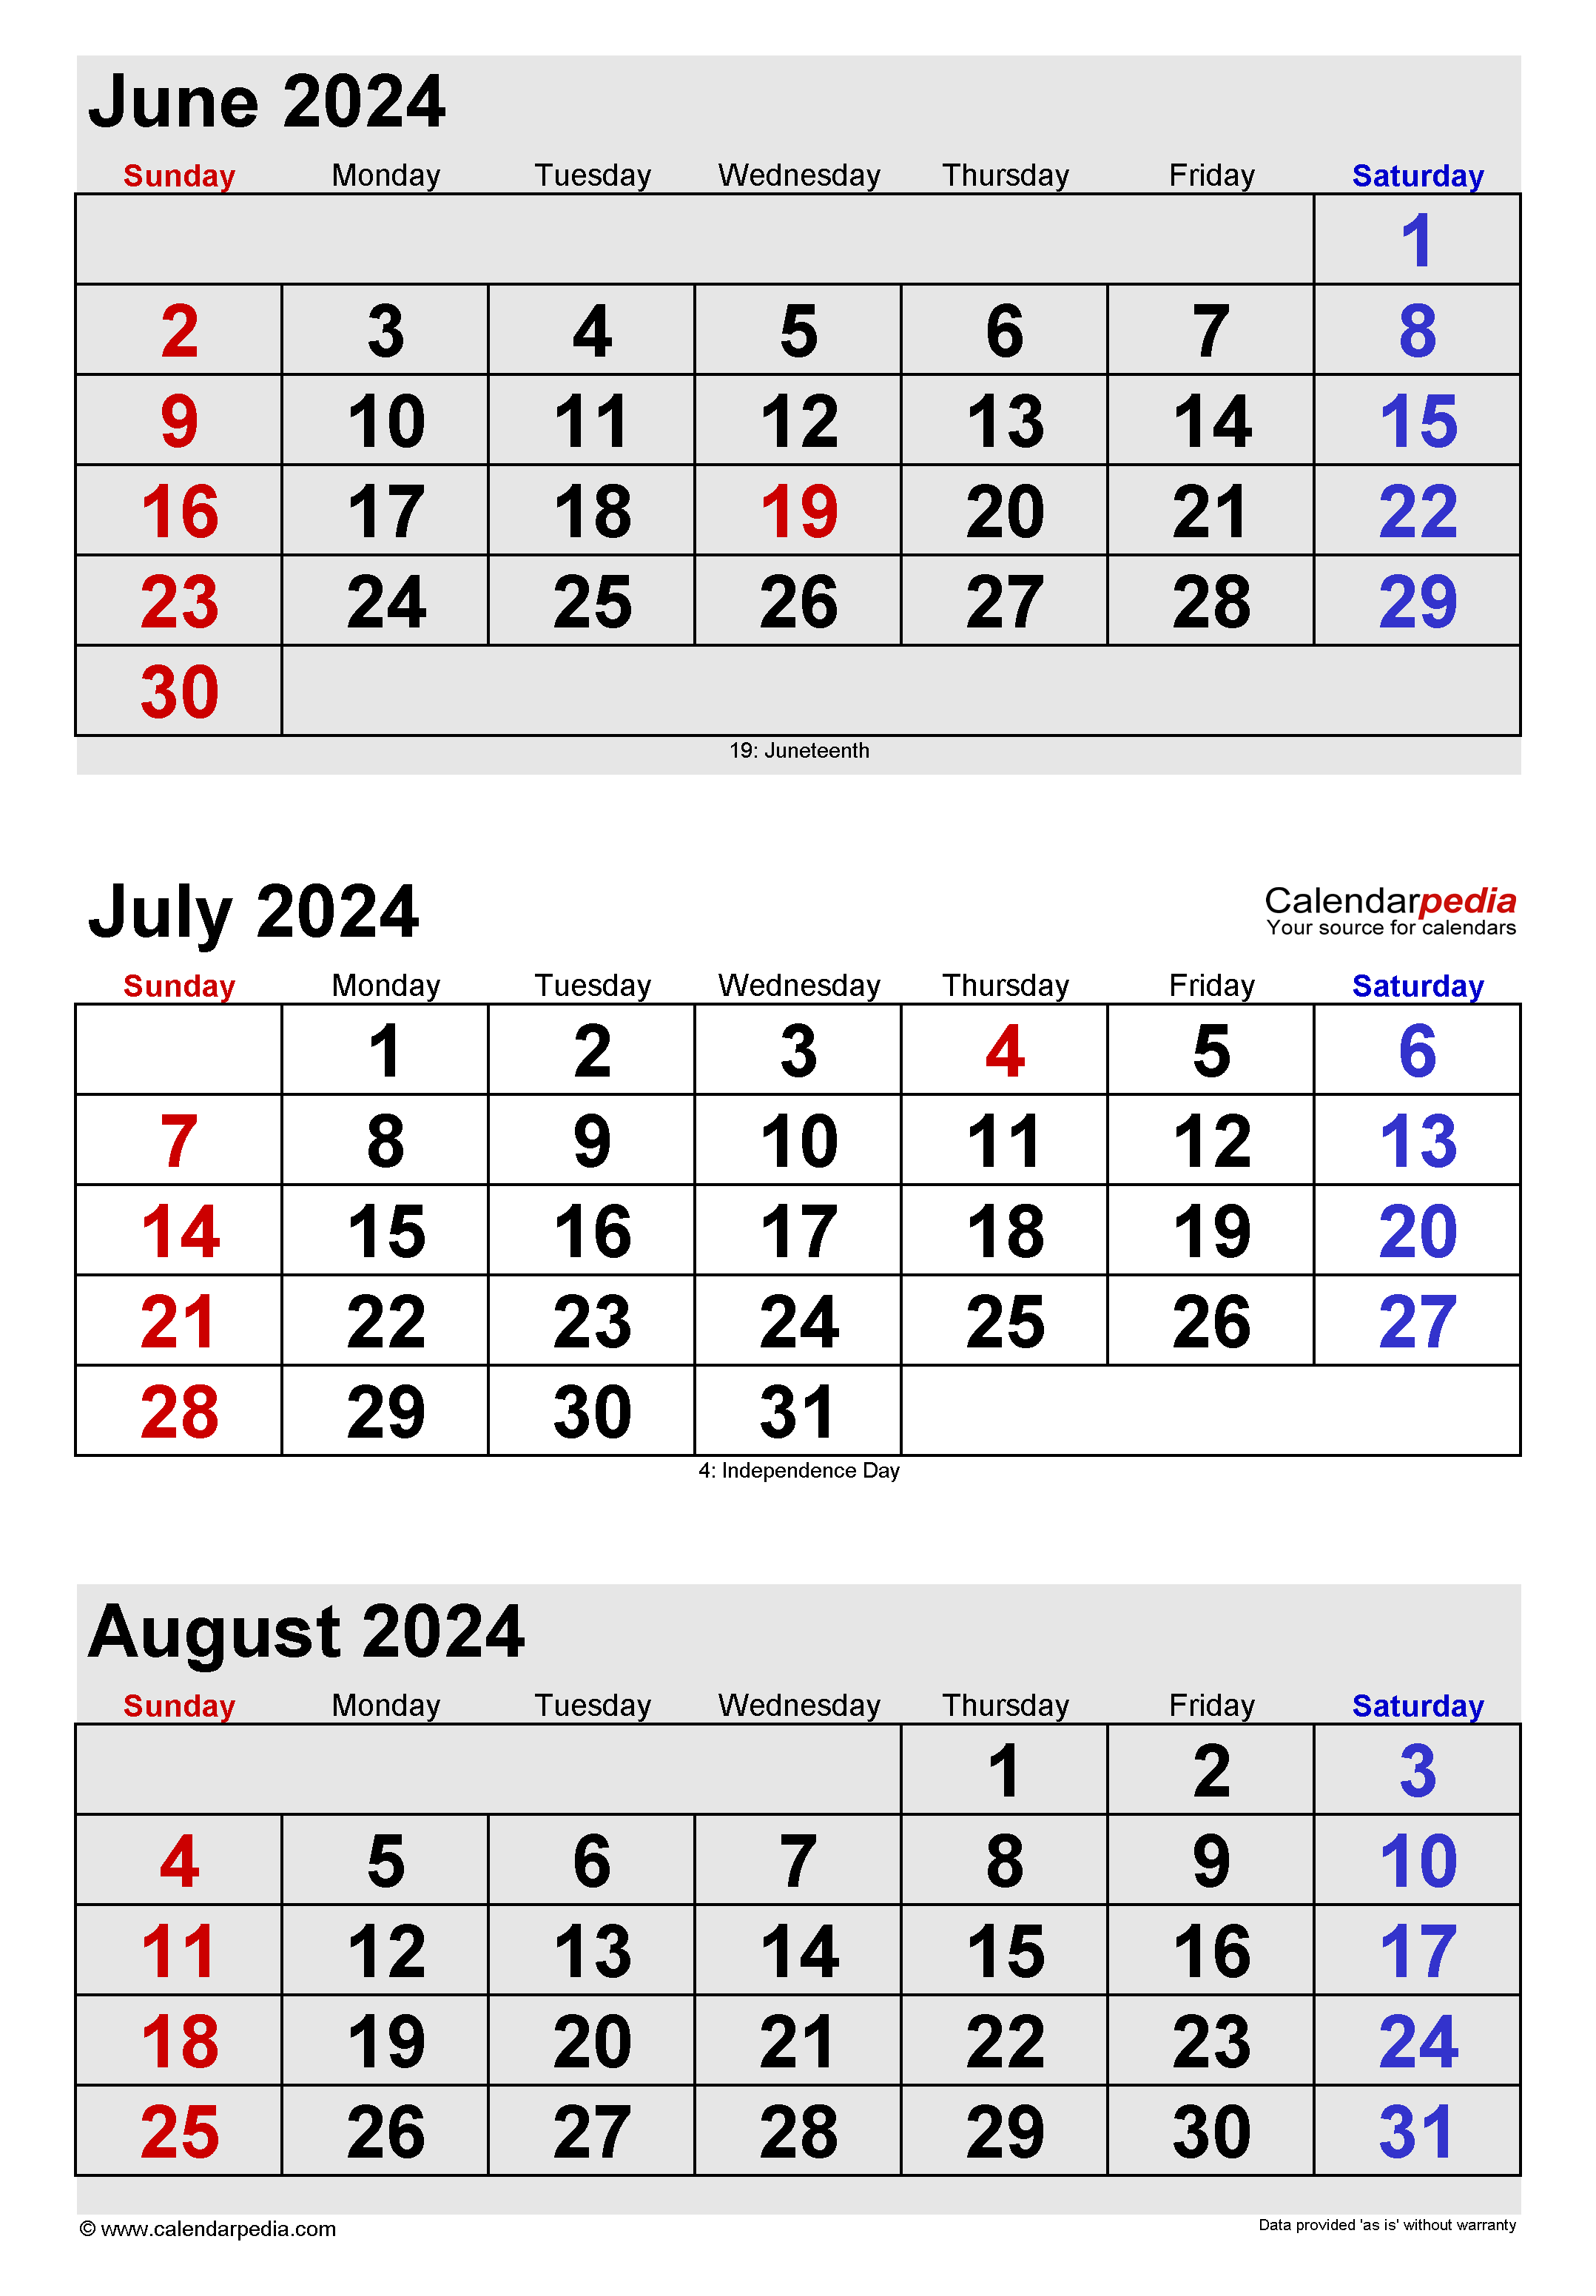 August 2024 July 2024 Calendar Printable 2024 CALENDAR PRINTABLE - Free Printable 2024 Calendar By Month July